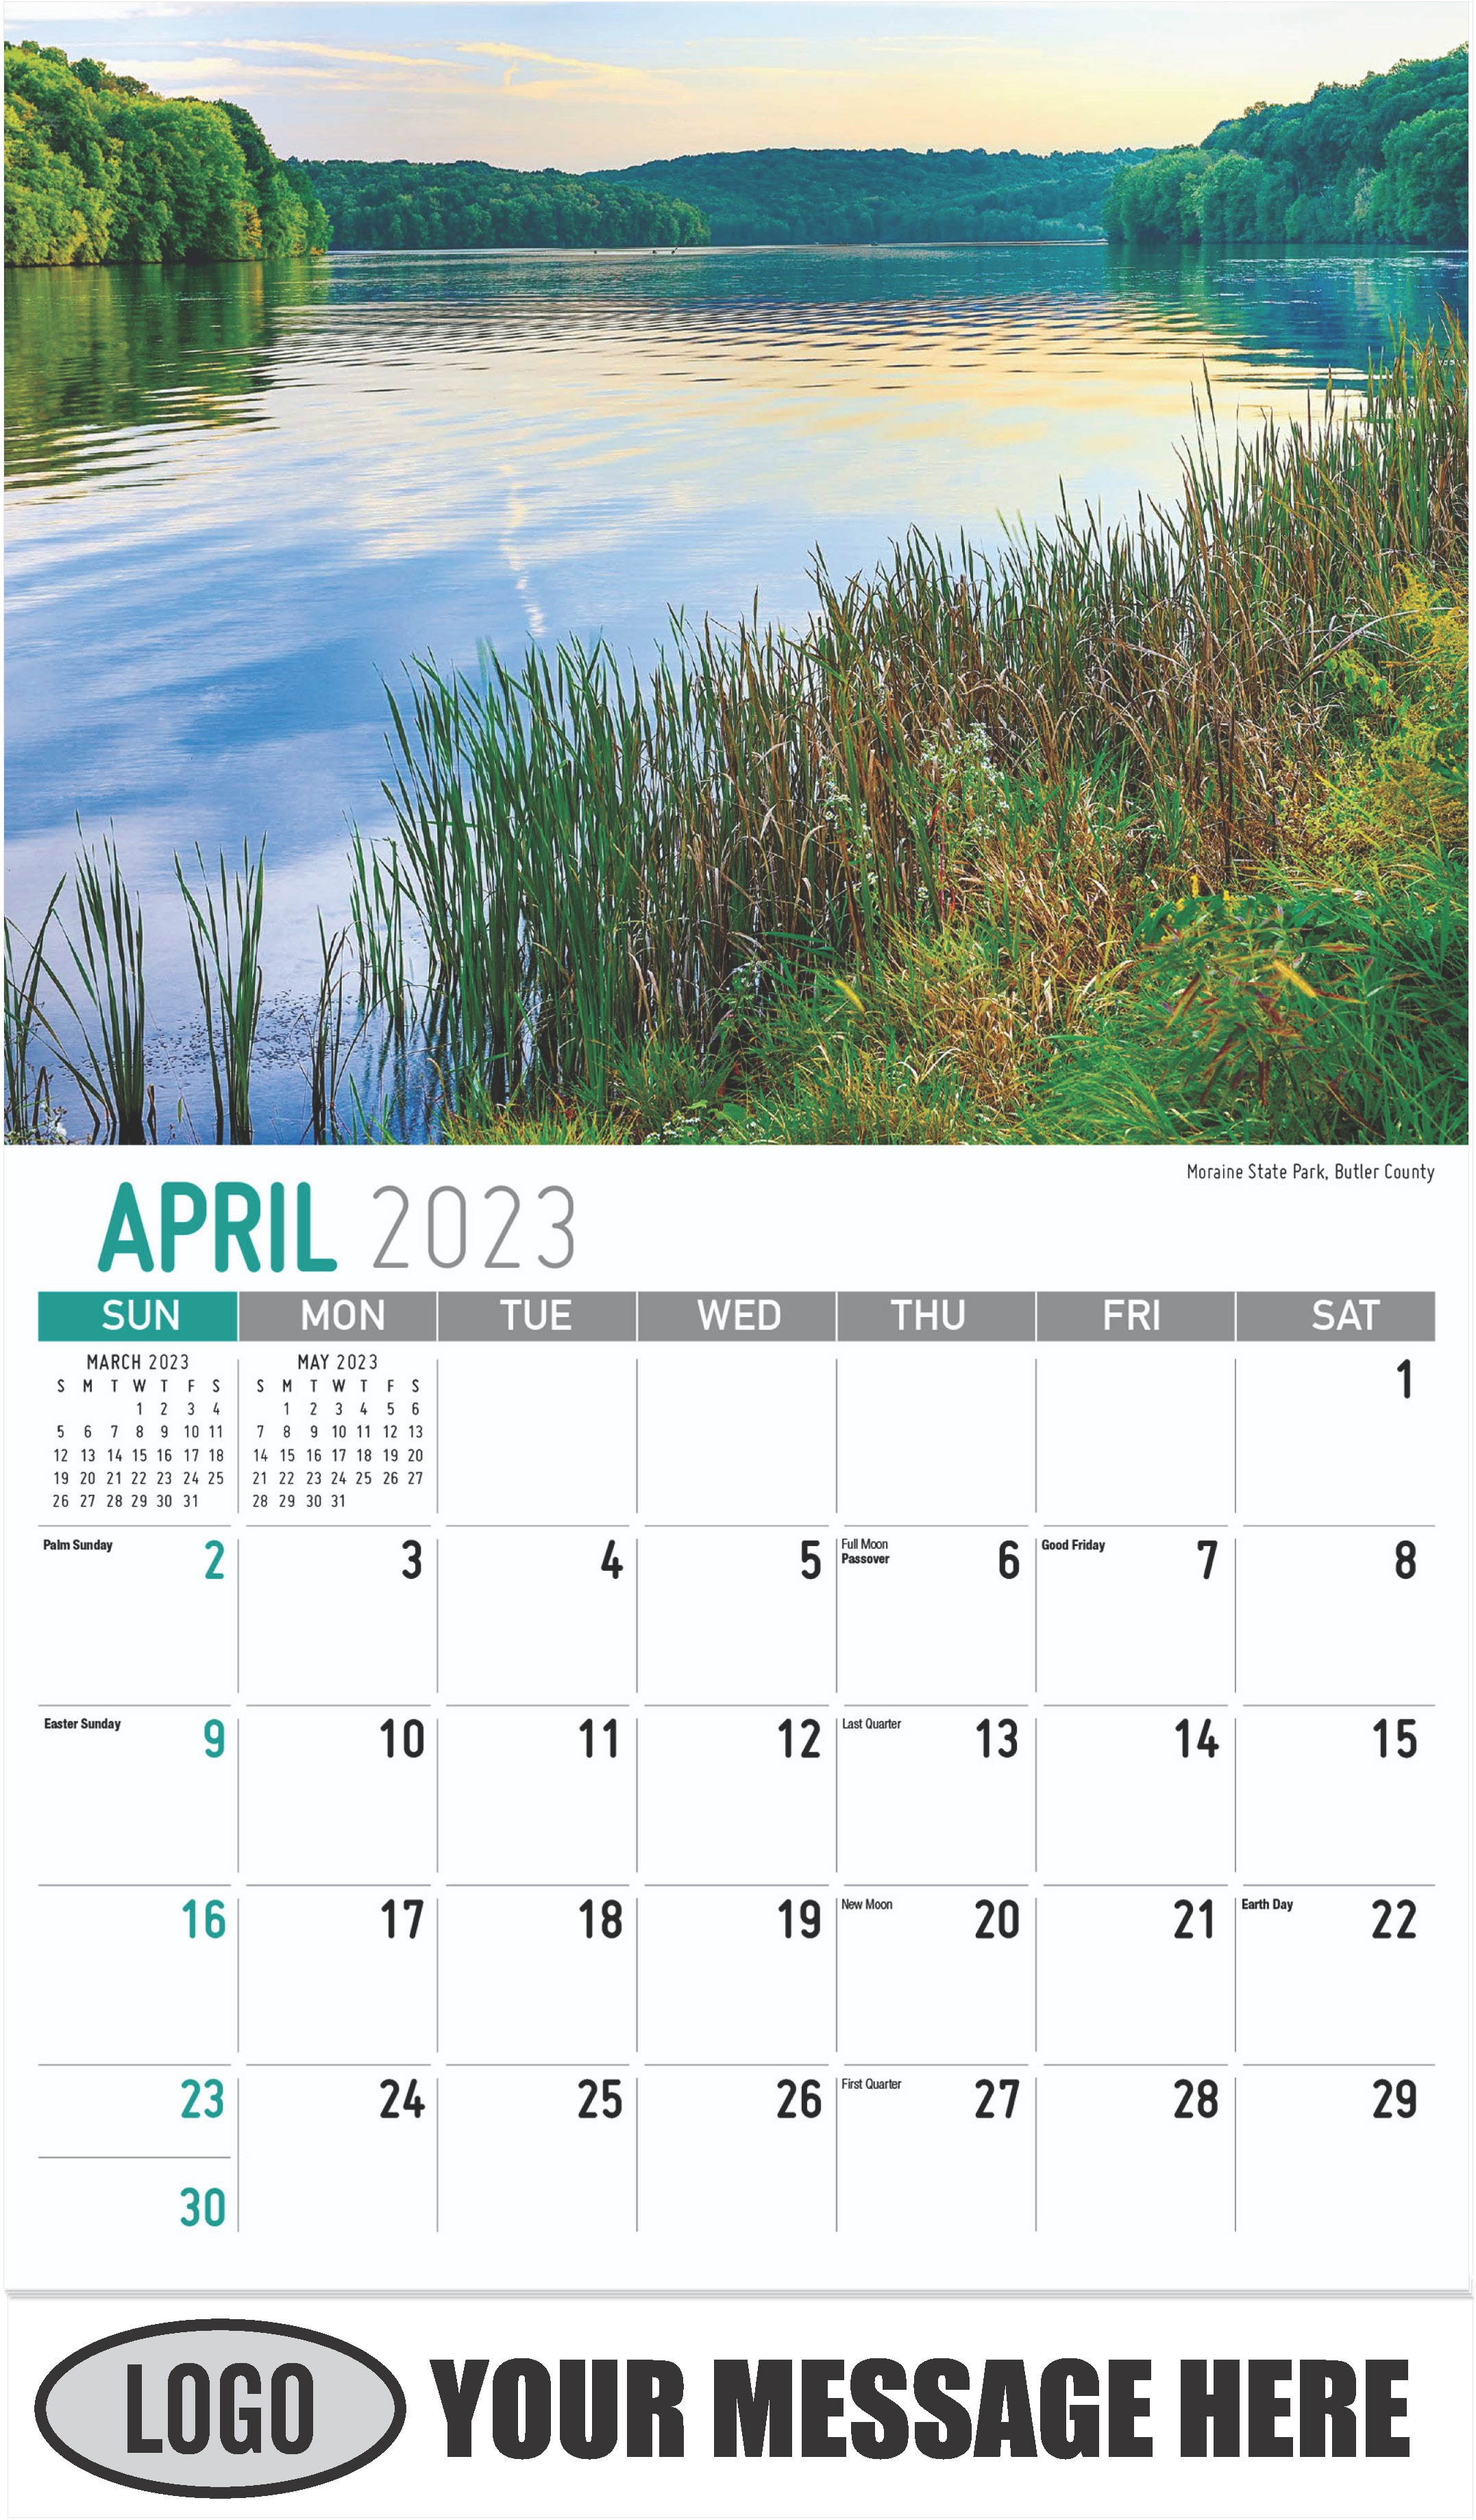 Moraine State Park, Butler County - April - Scenes of Pennsylvania 2023 Promotional Calendar